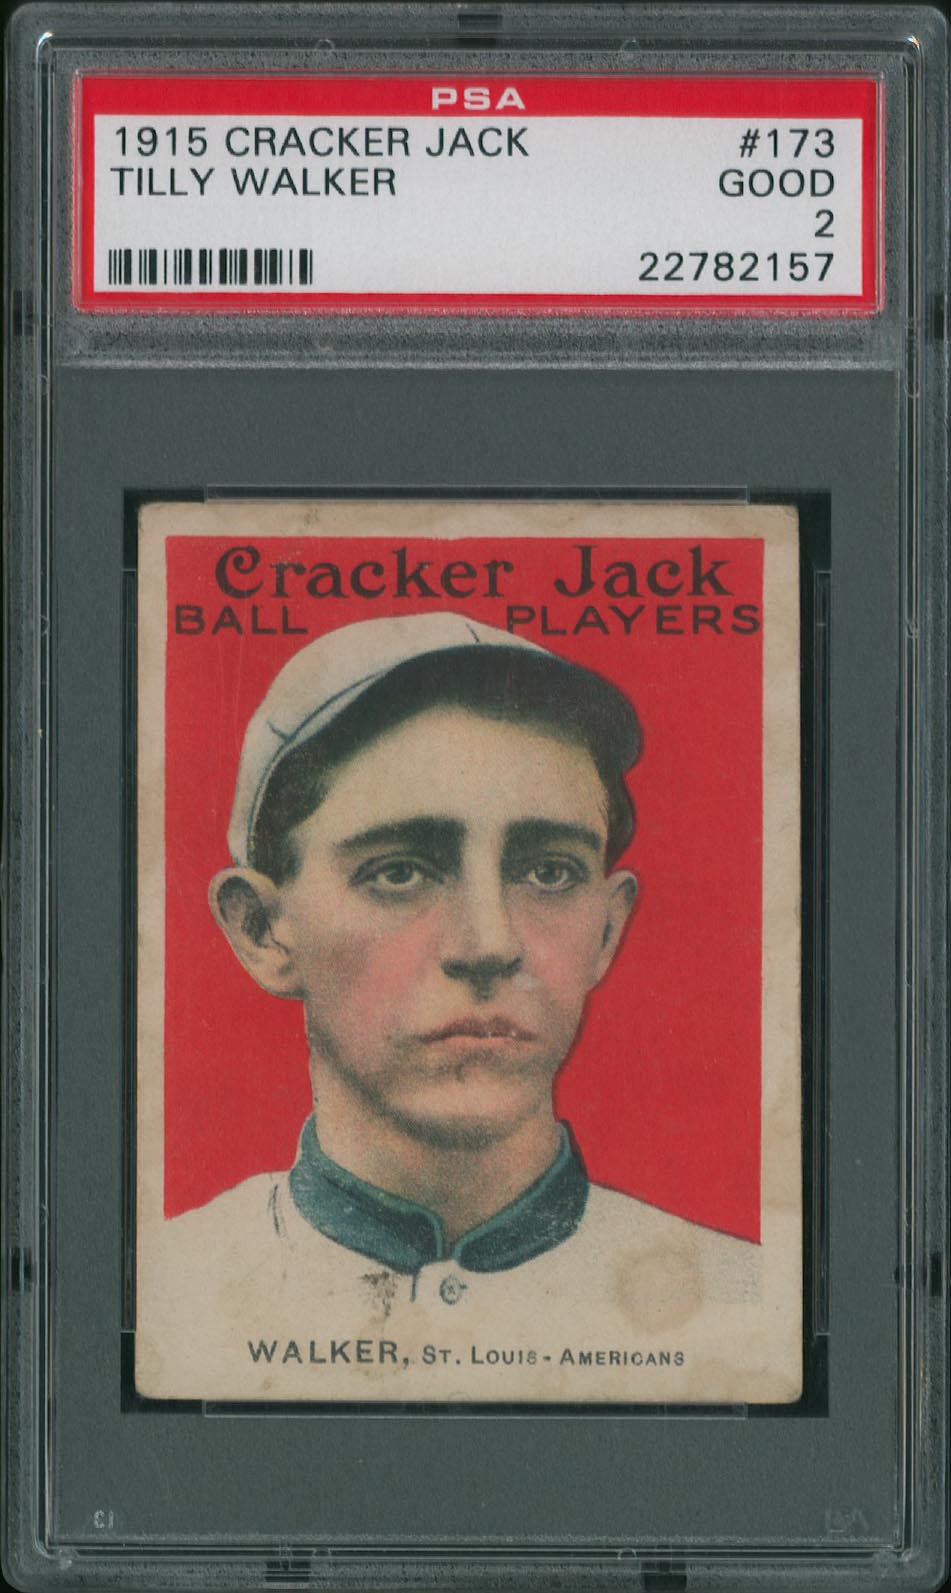  1915 Cracker Jack #173 Tilly Walker - PSA GOOD 2